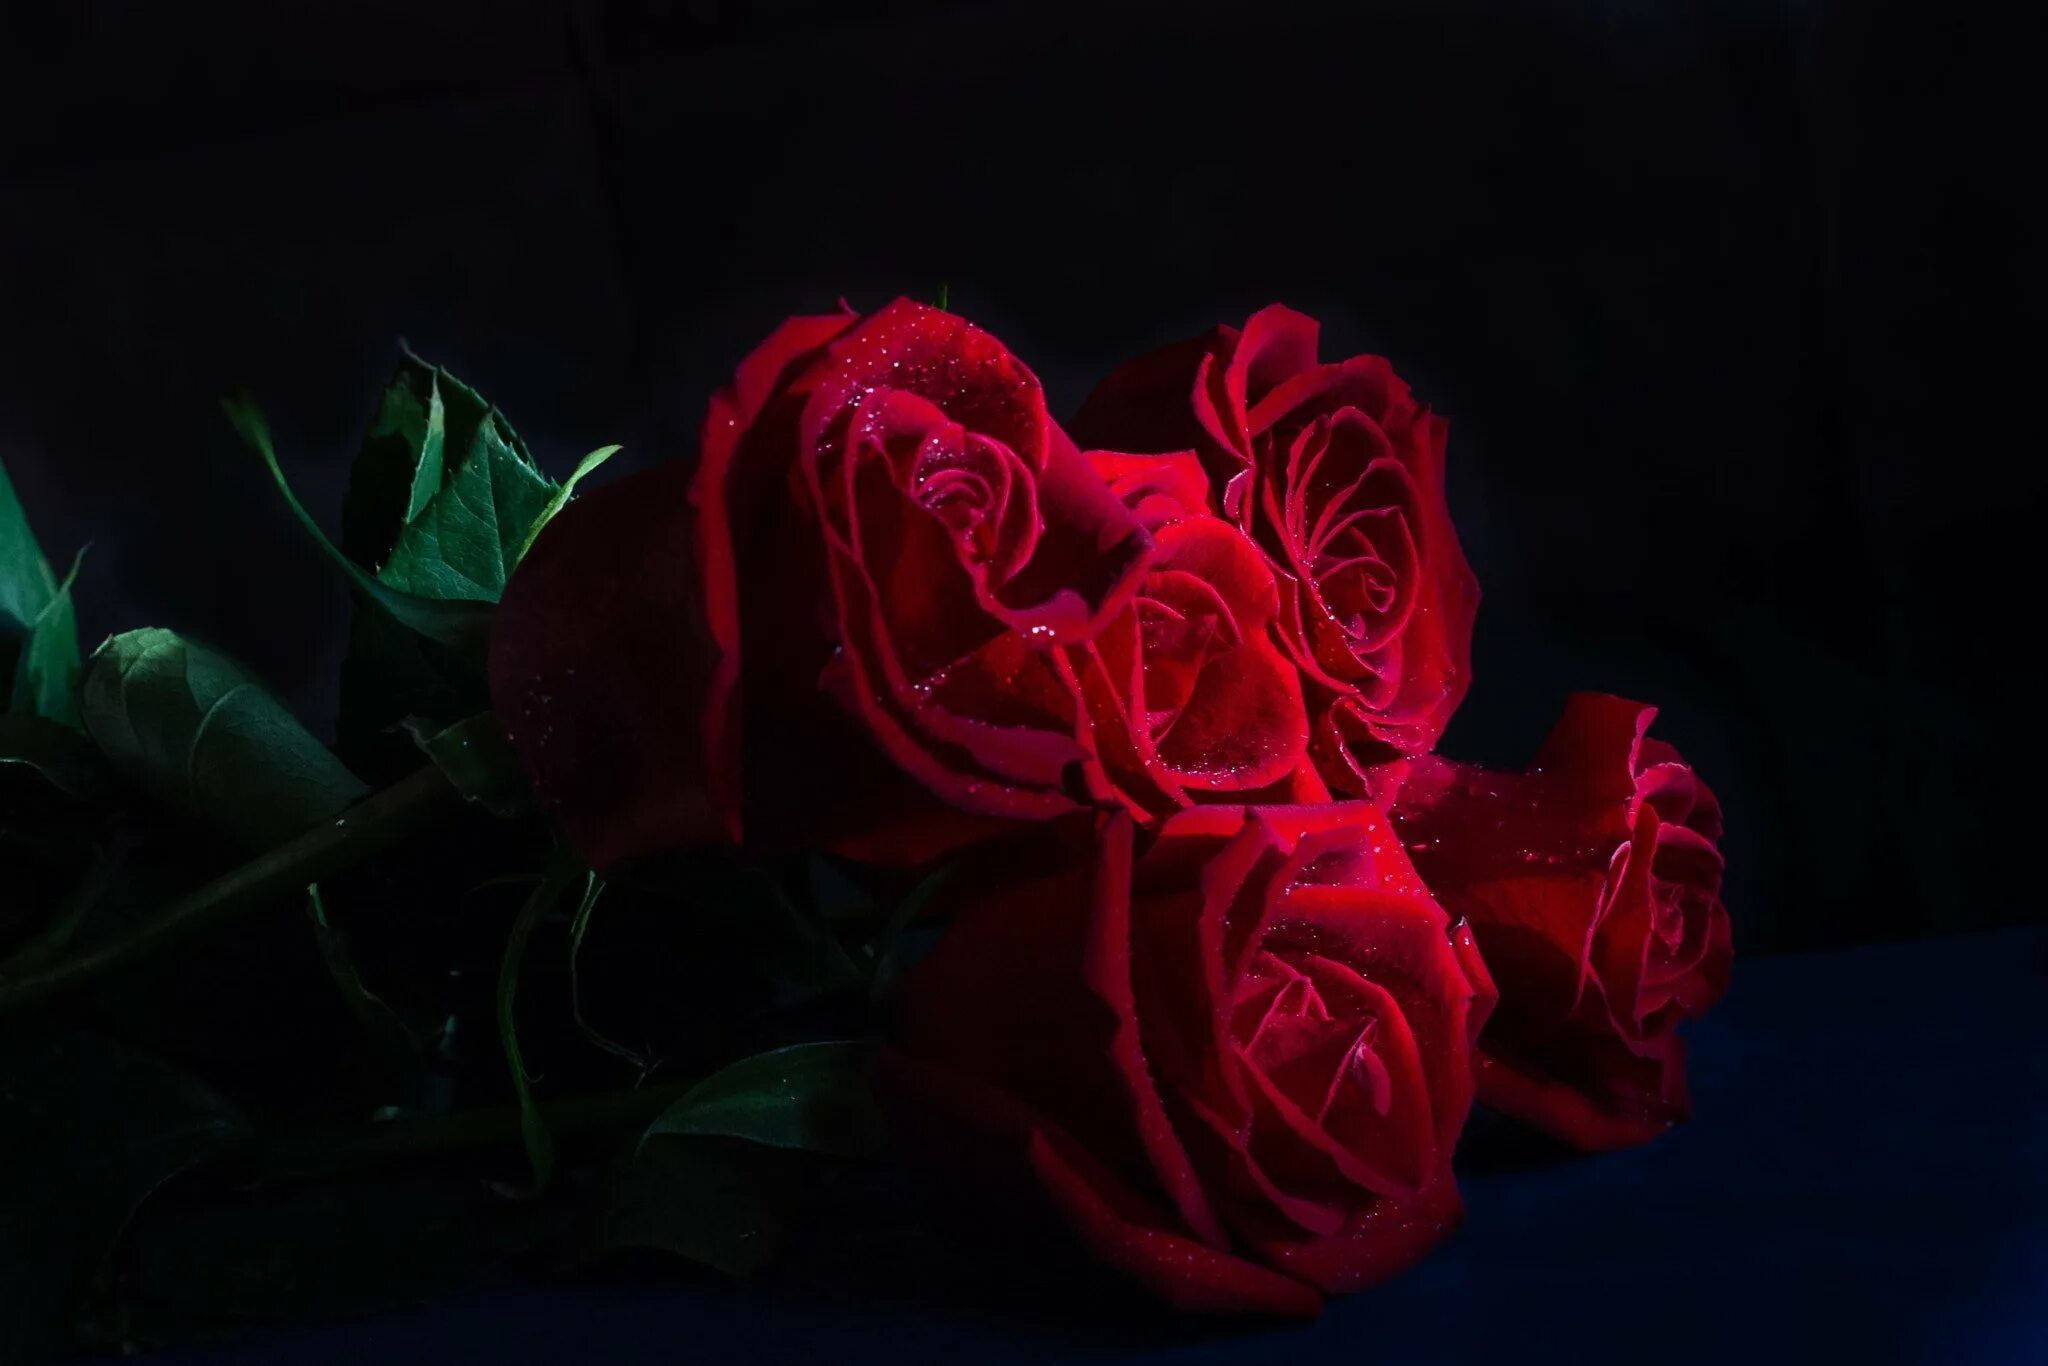 Букет роз ночью. Цветы на темном фоне. Цветы на черном фоне. Цветы розы на черном фоне. Букет роз на темном фоне.